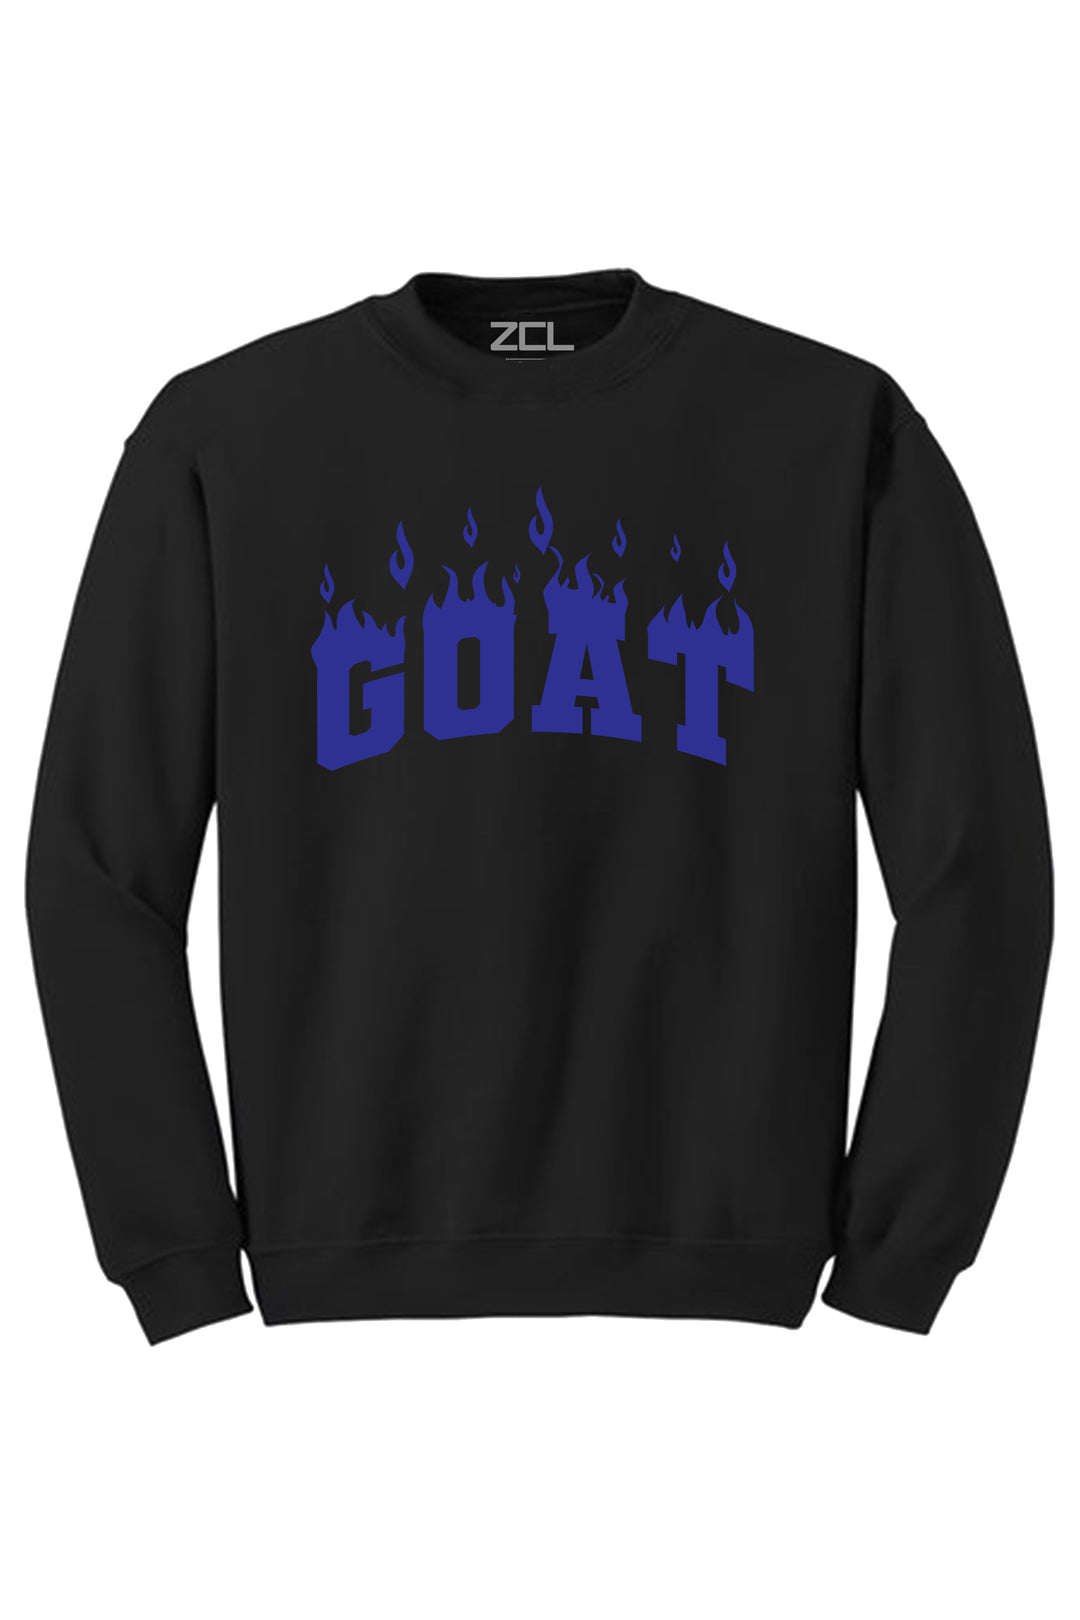 Goat Flame Crewneck Sweatshirt (Navy Logo) - Zamage